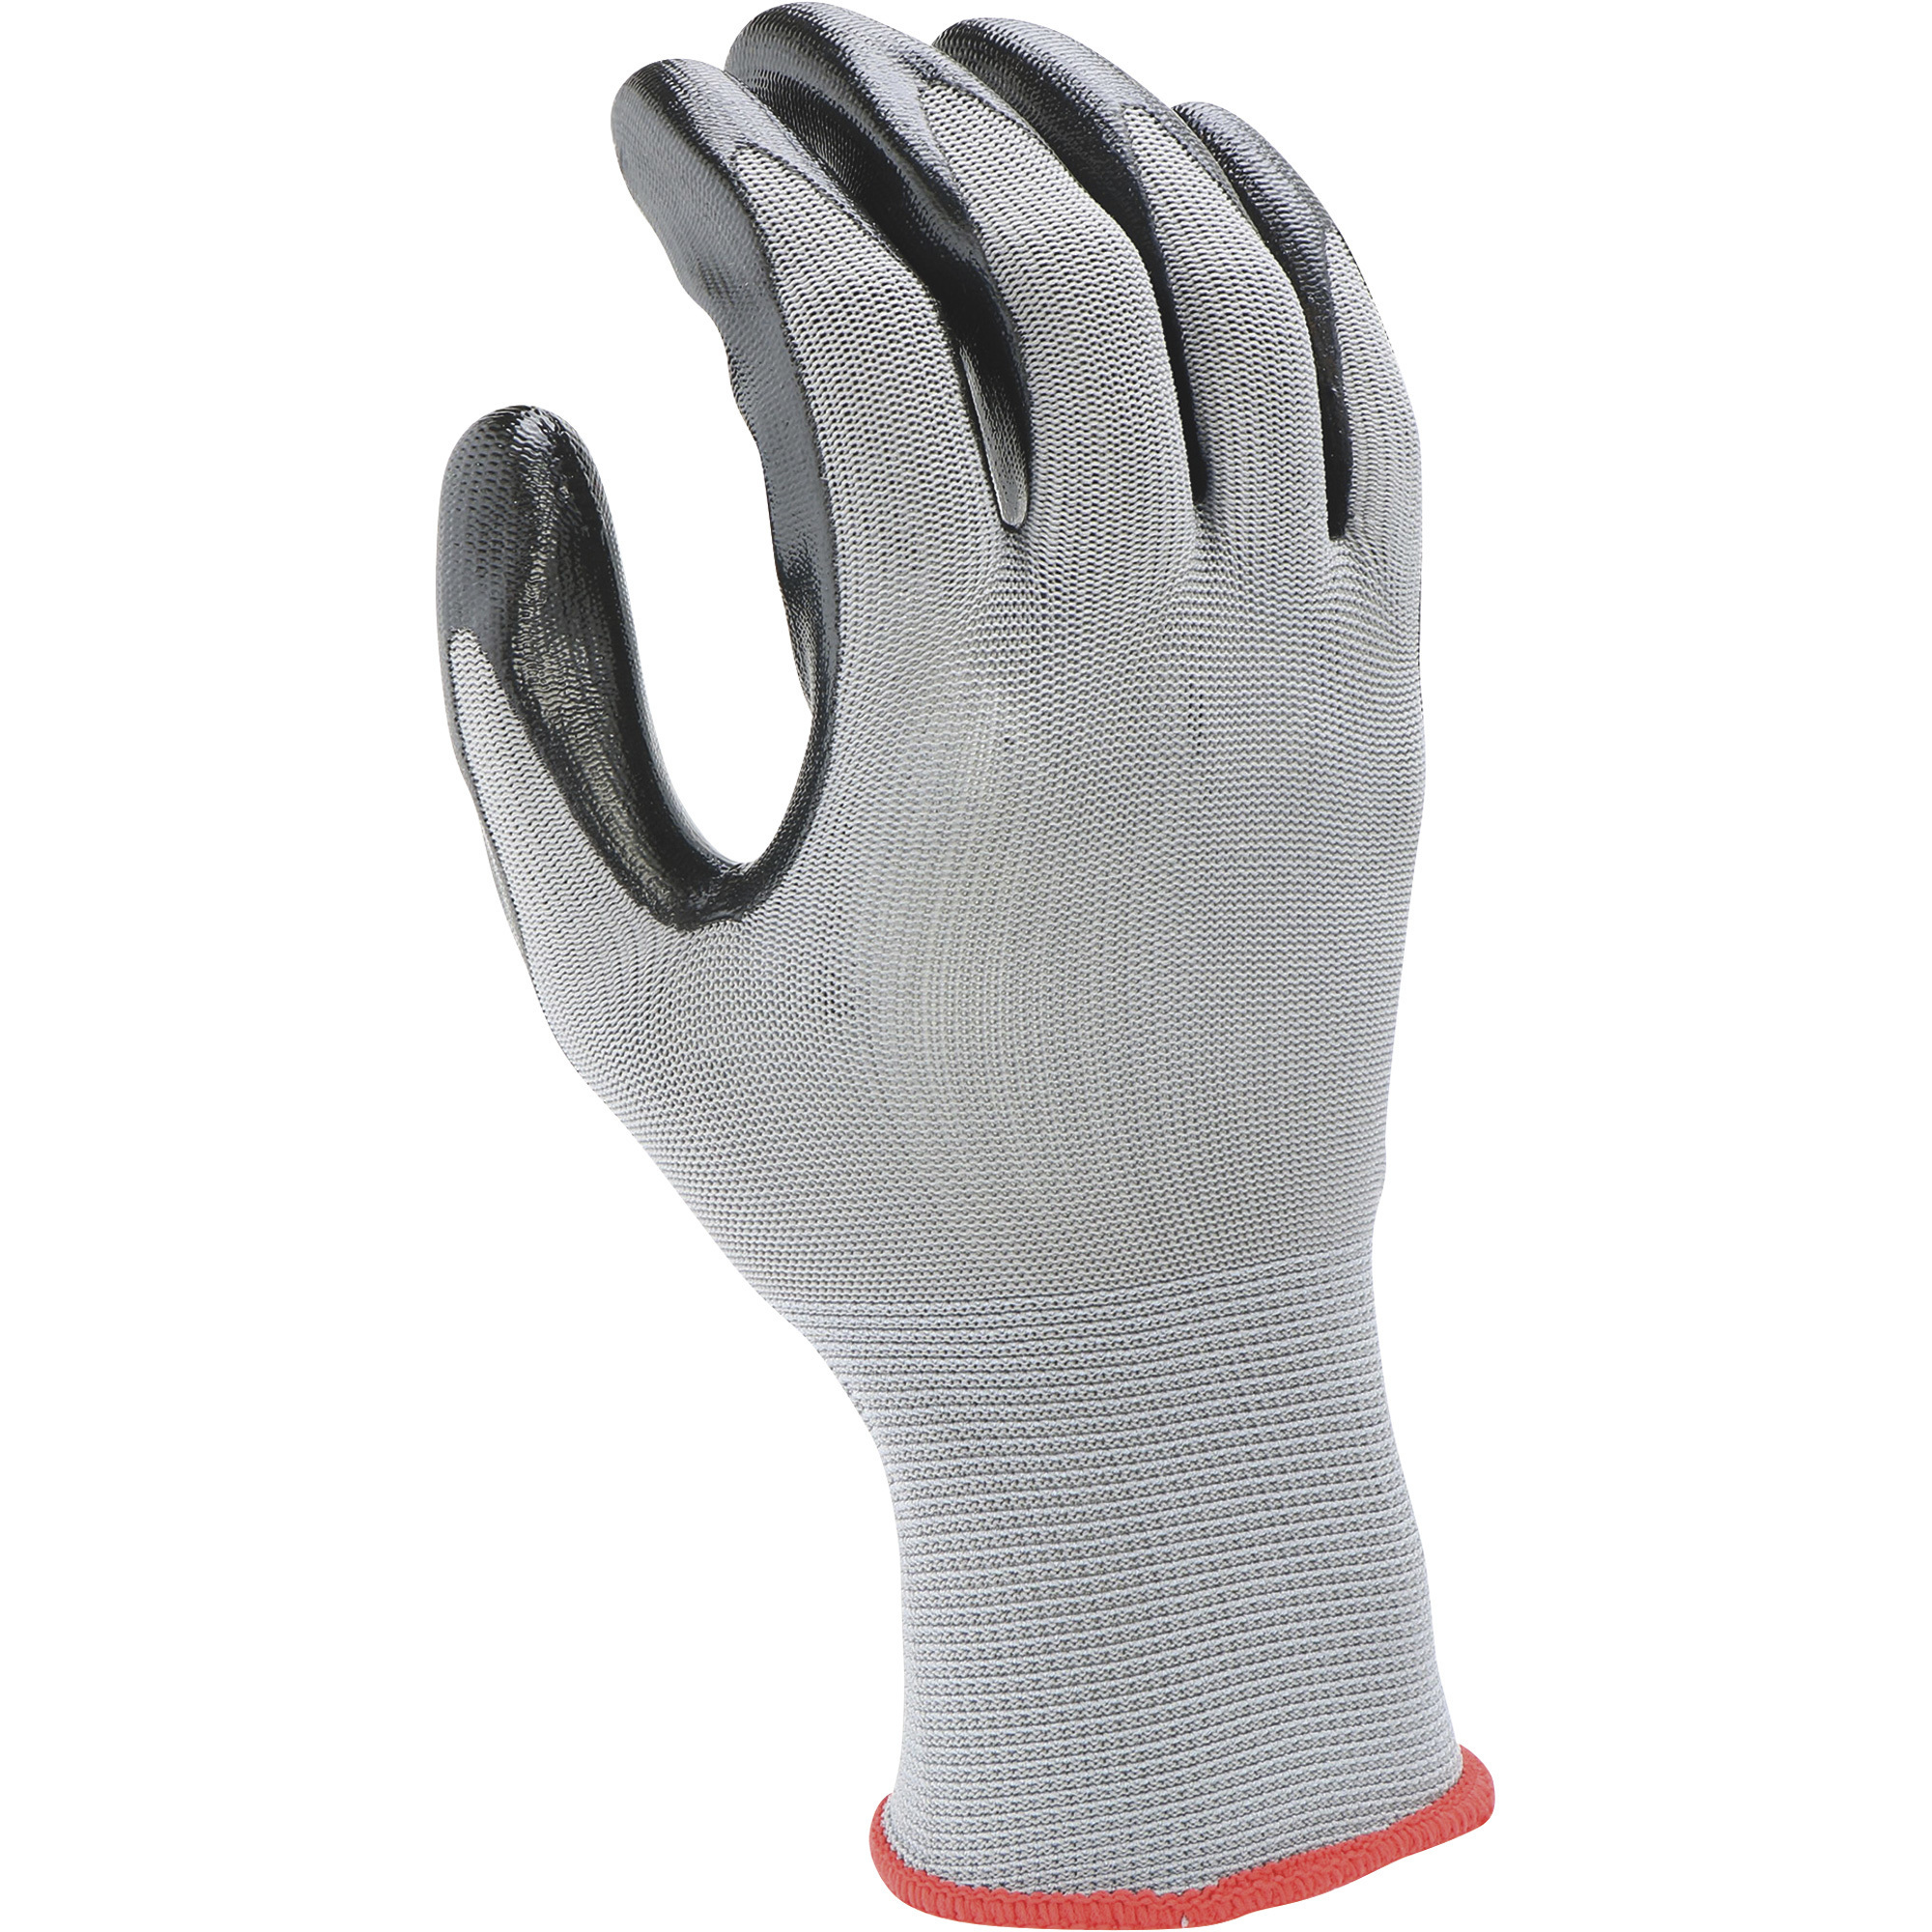 Ironton Men's Nitrile-Coated Work Gloves